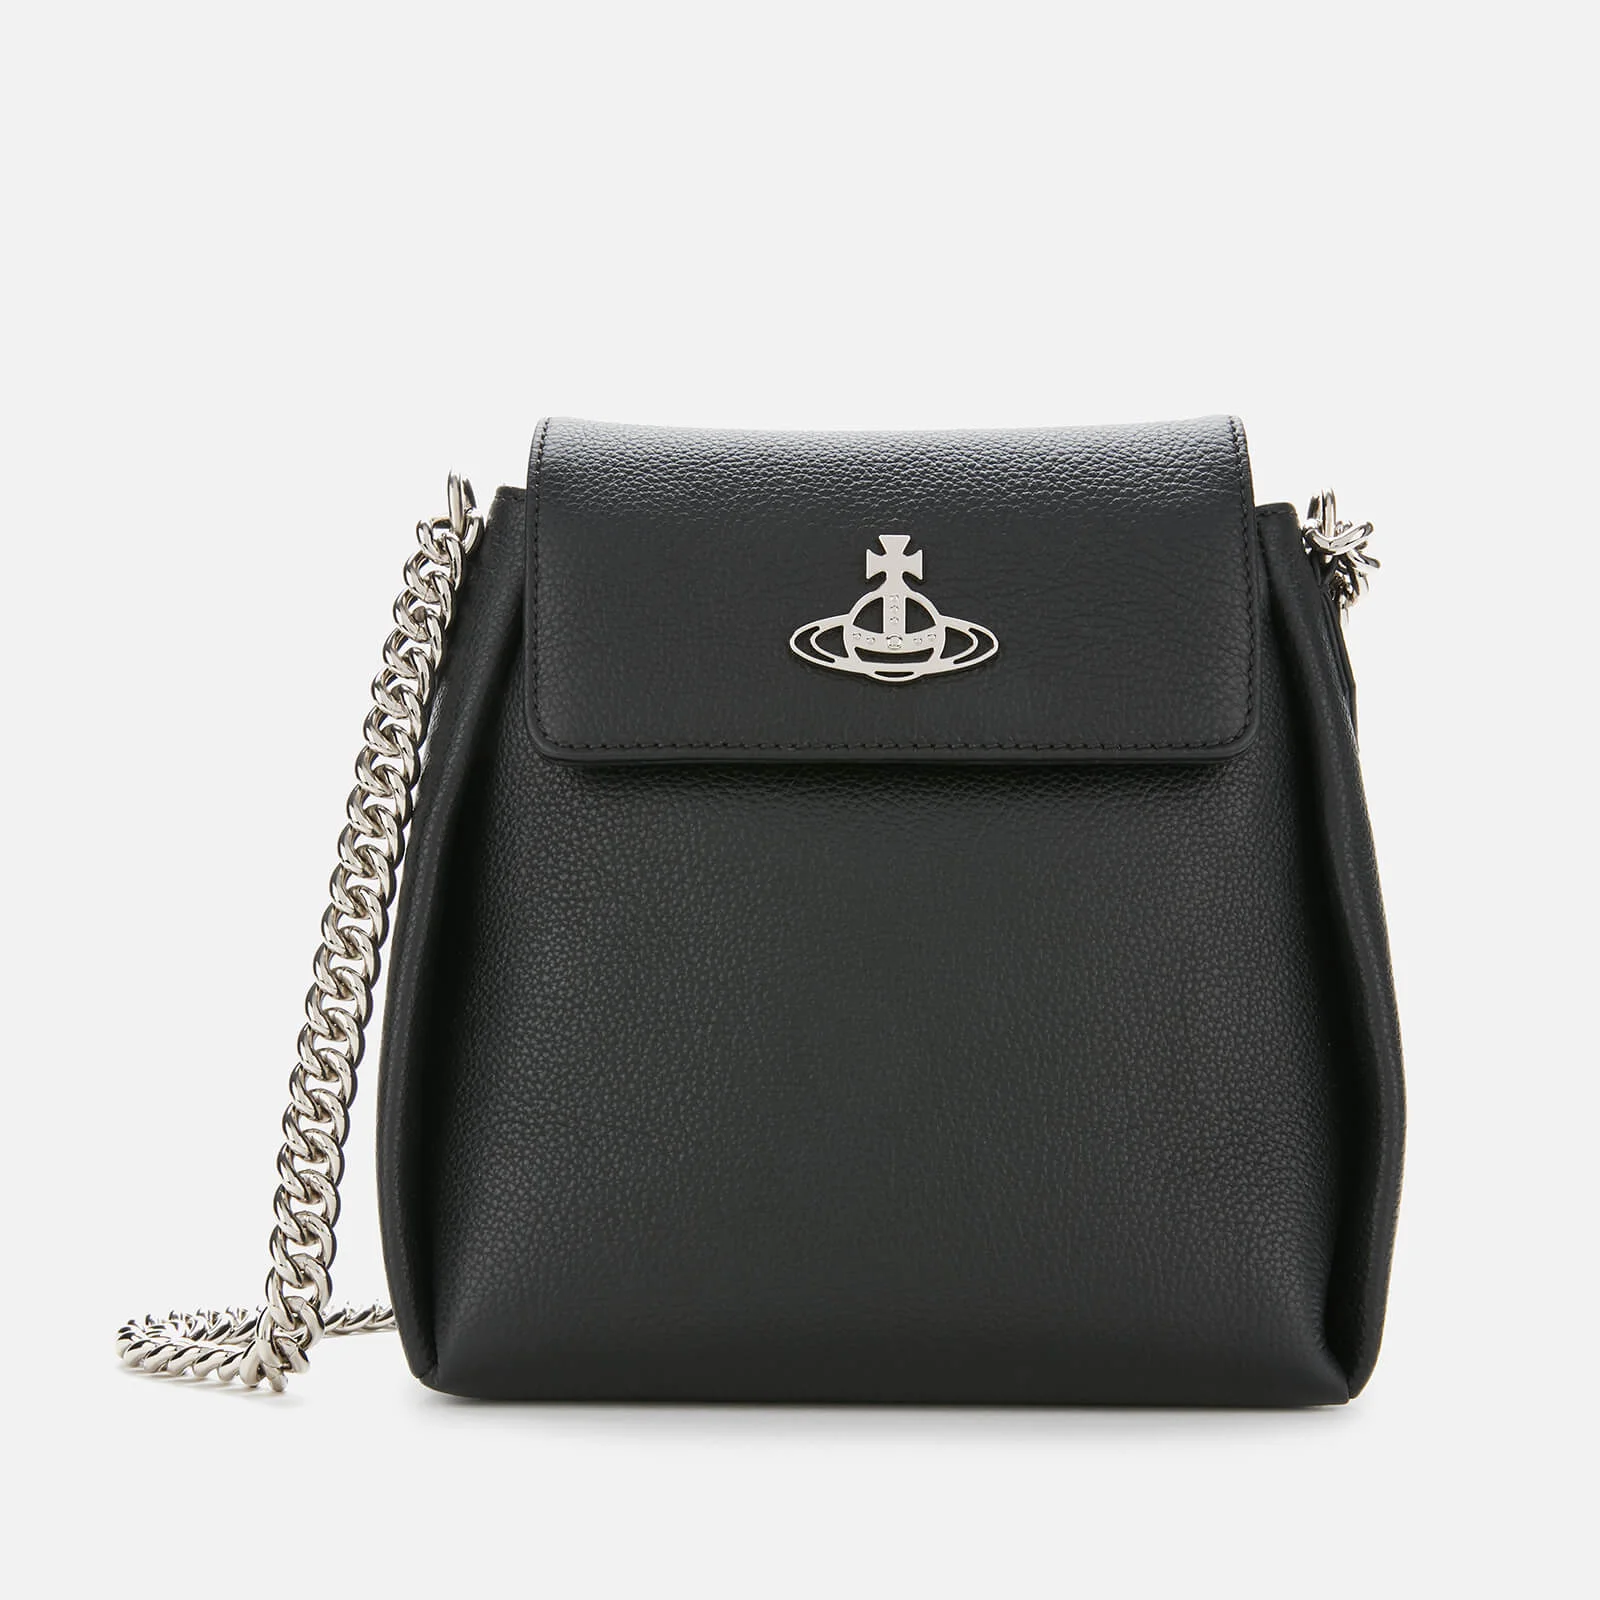 Vivienne Westwood Women's Windsor Bucket Bag - Black Image 1